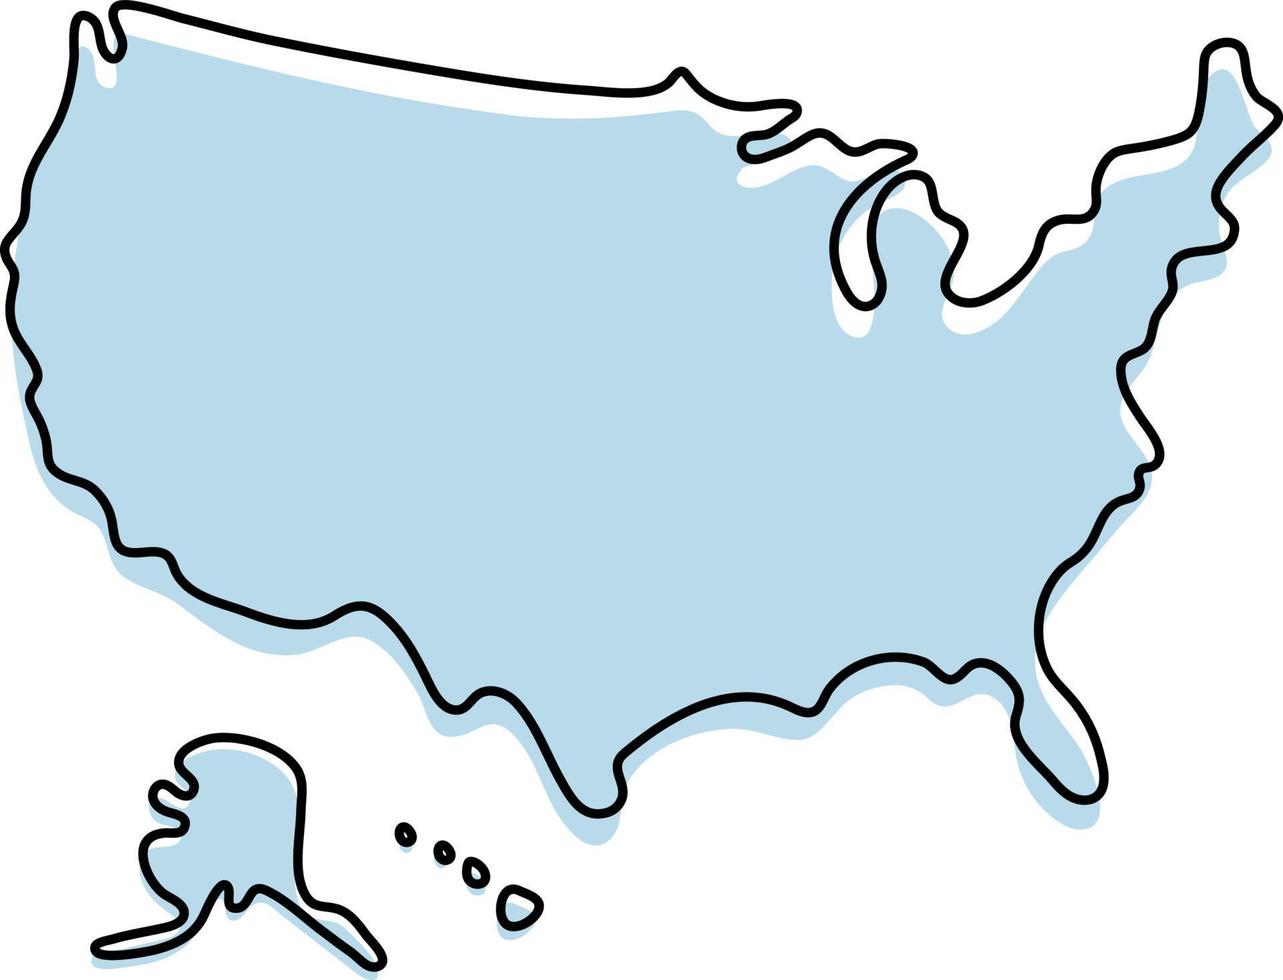 stilisierte einfache Übersichtskarte des Usa-Symbols. blaue skizzenkarte von amerika-vektorillustration vektor